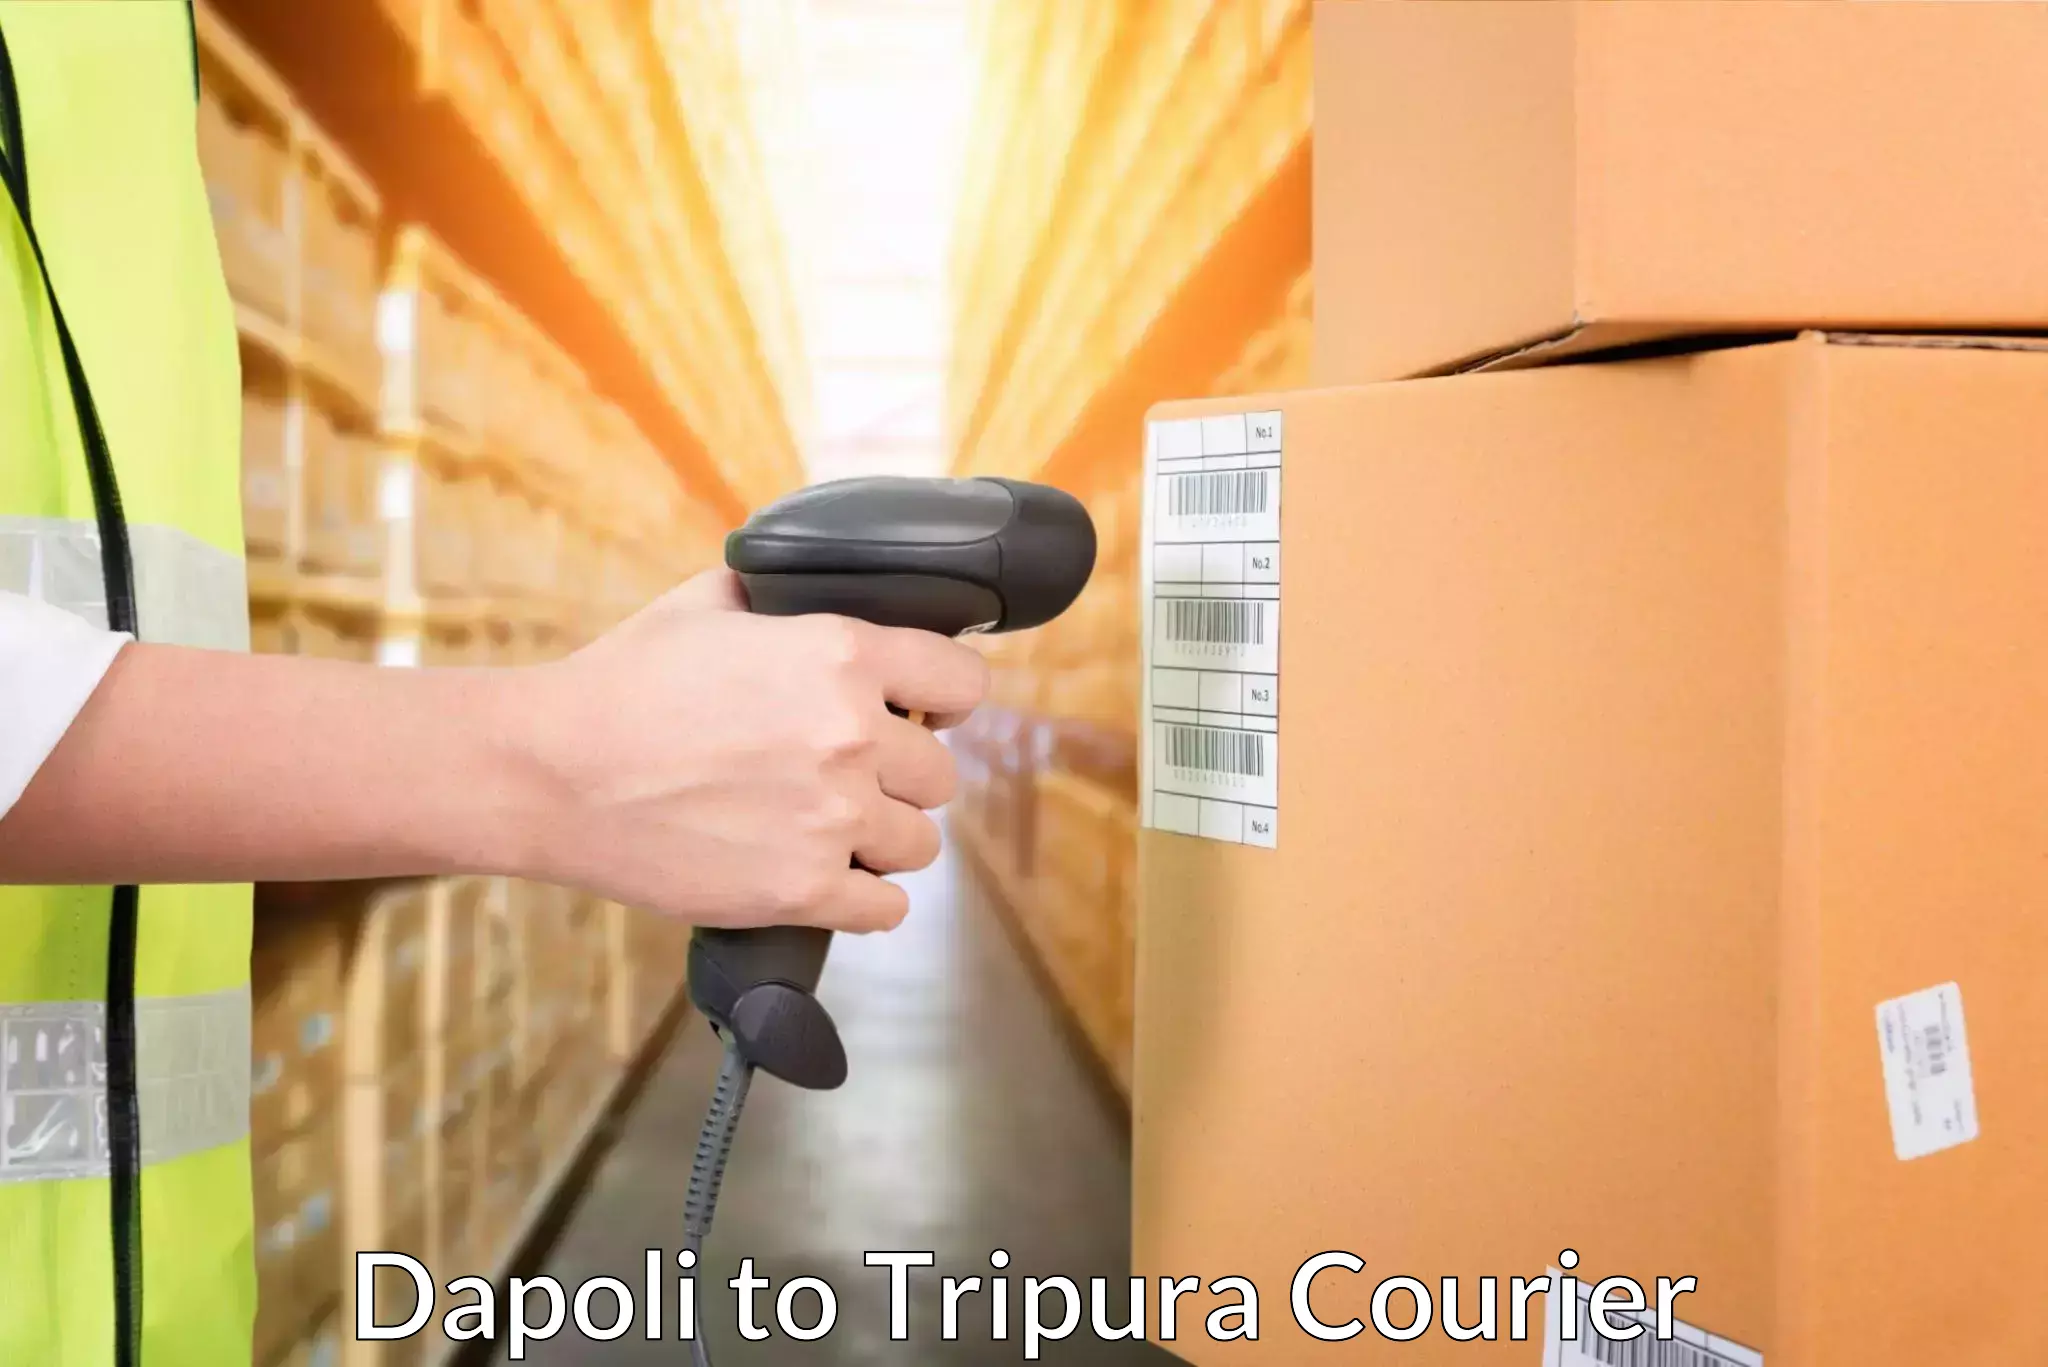 Seamless shipping experience Dapoli to Agartala